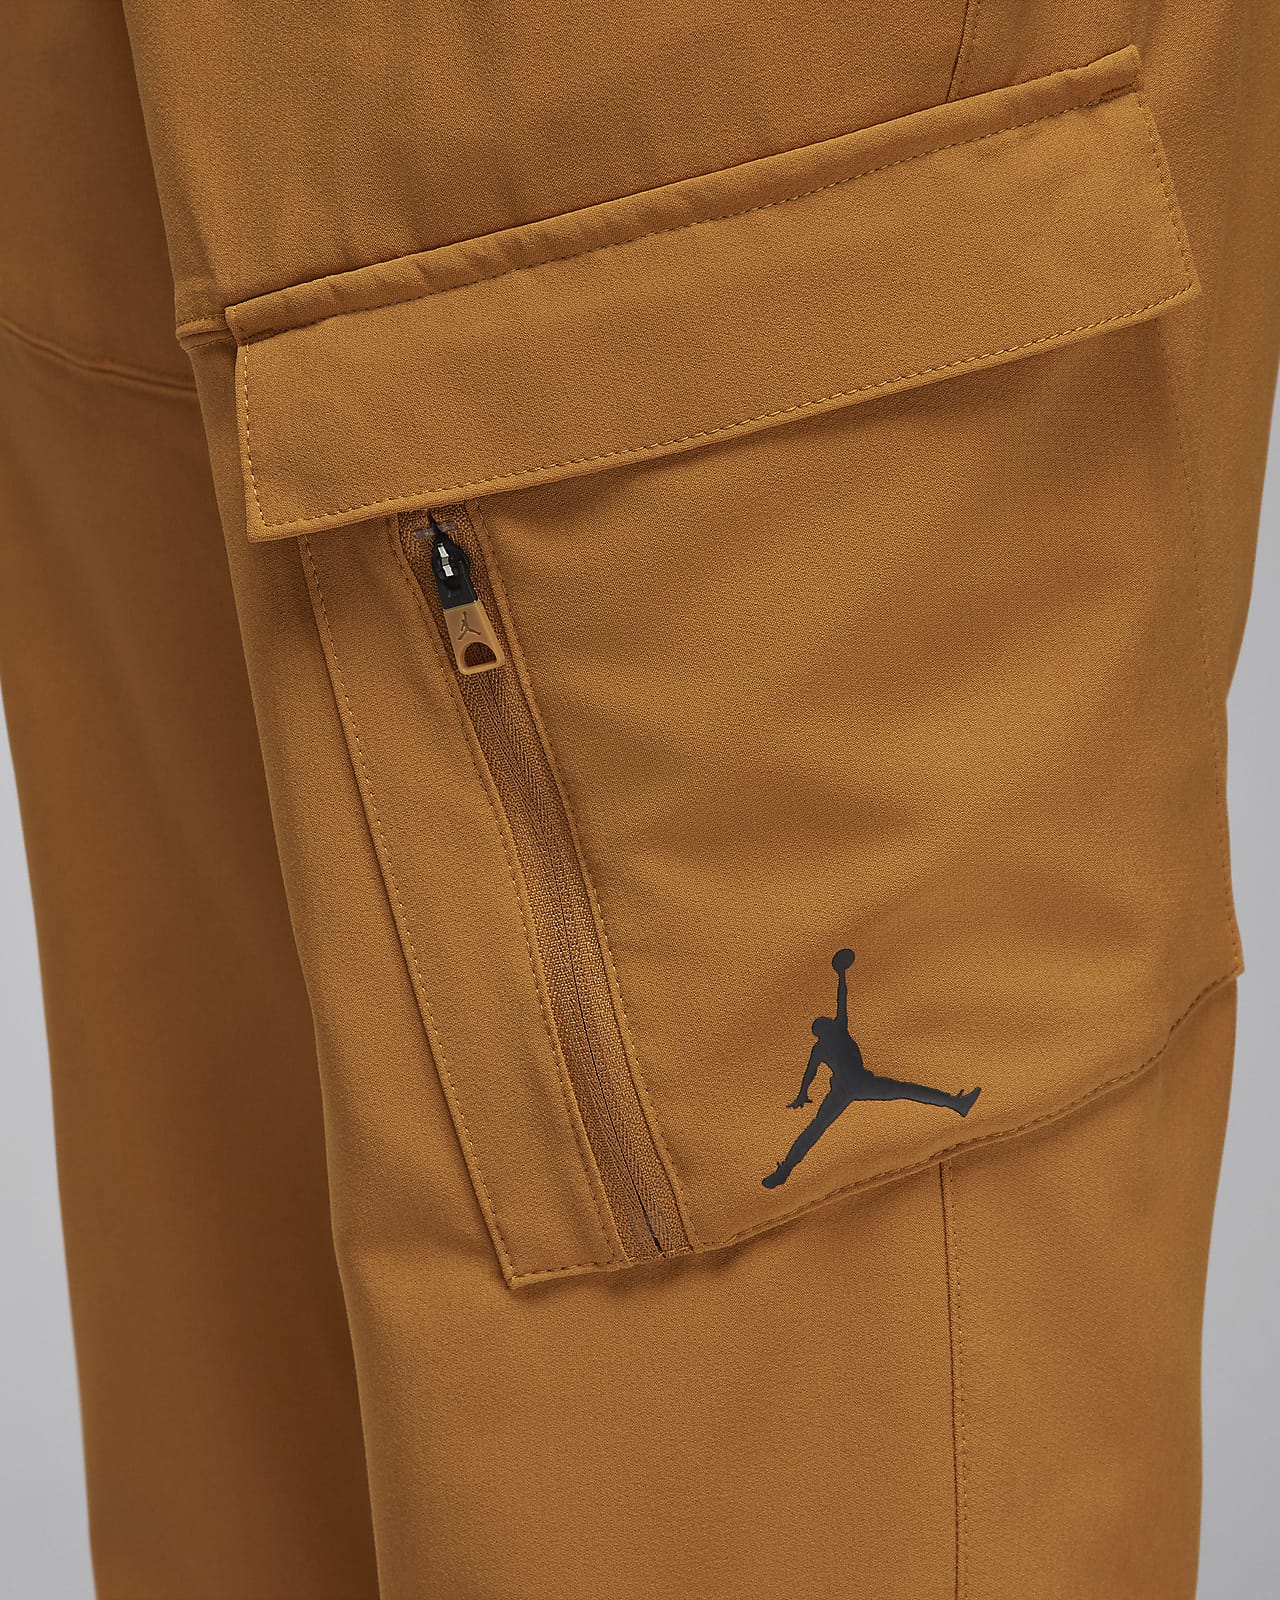 Jordan Essentials Pantalón Utility - Mujer. Nike ES